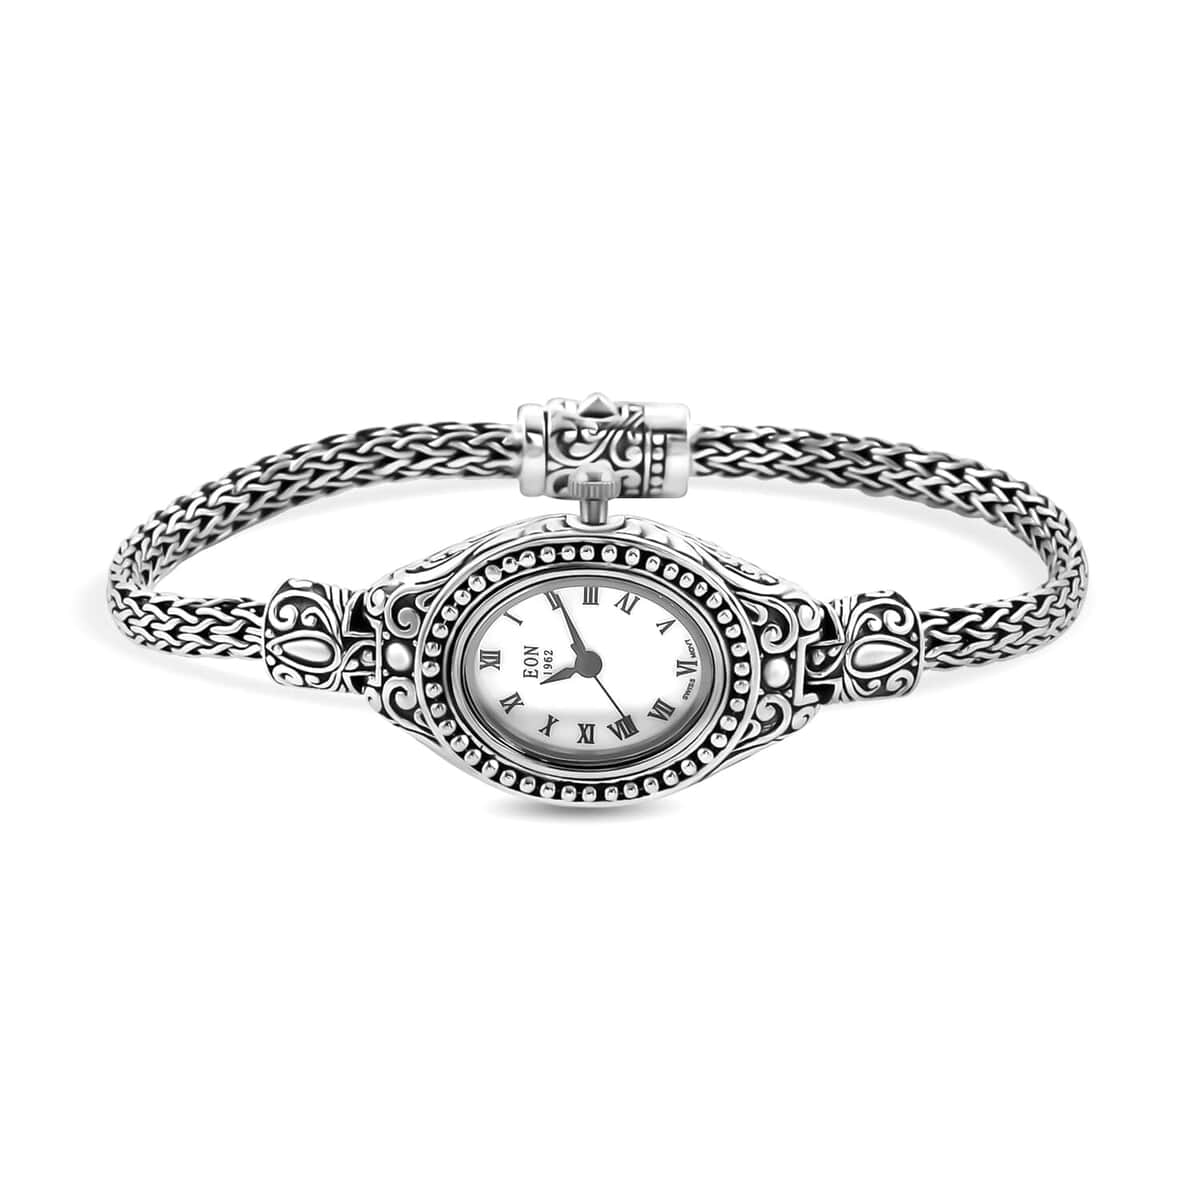 Bali Legacy Eon 1962 Swiss Movement Sterling Silver Tulang Naga Bracelet Watch (8 in), Designer Bracelet Watch, Analog Luxury Wristwatch image number 6